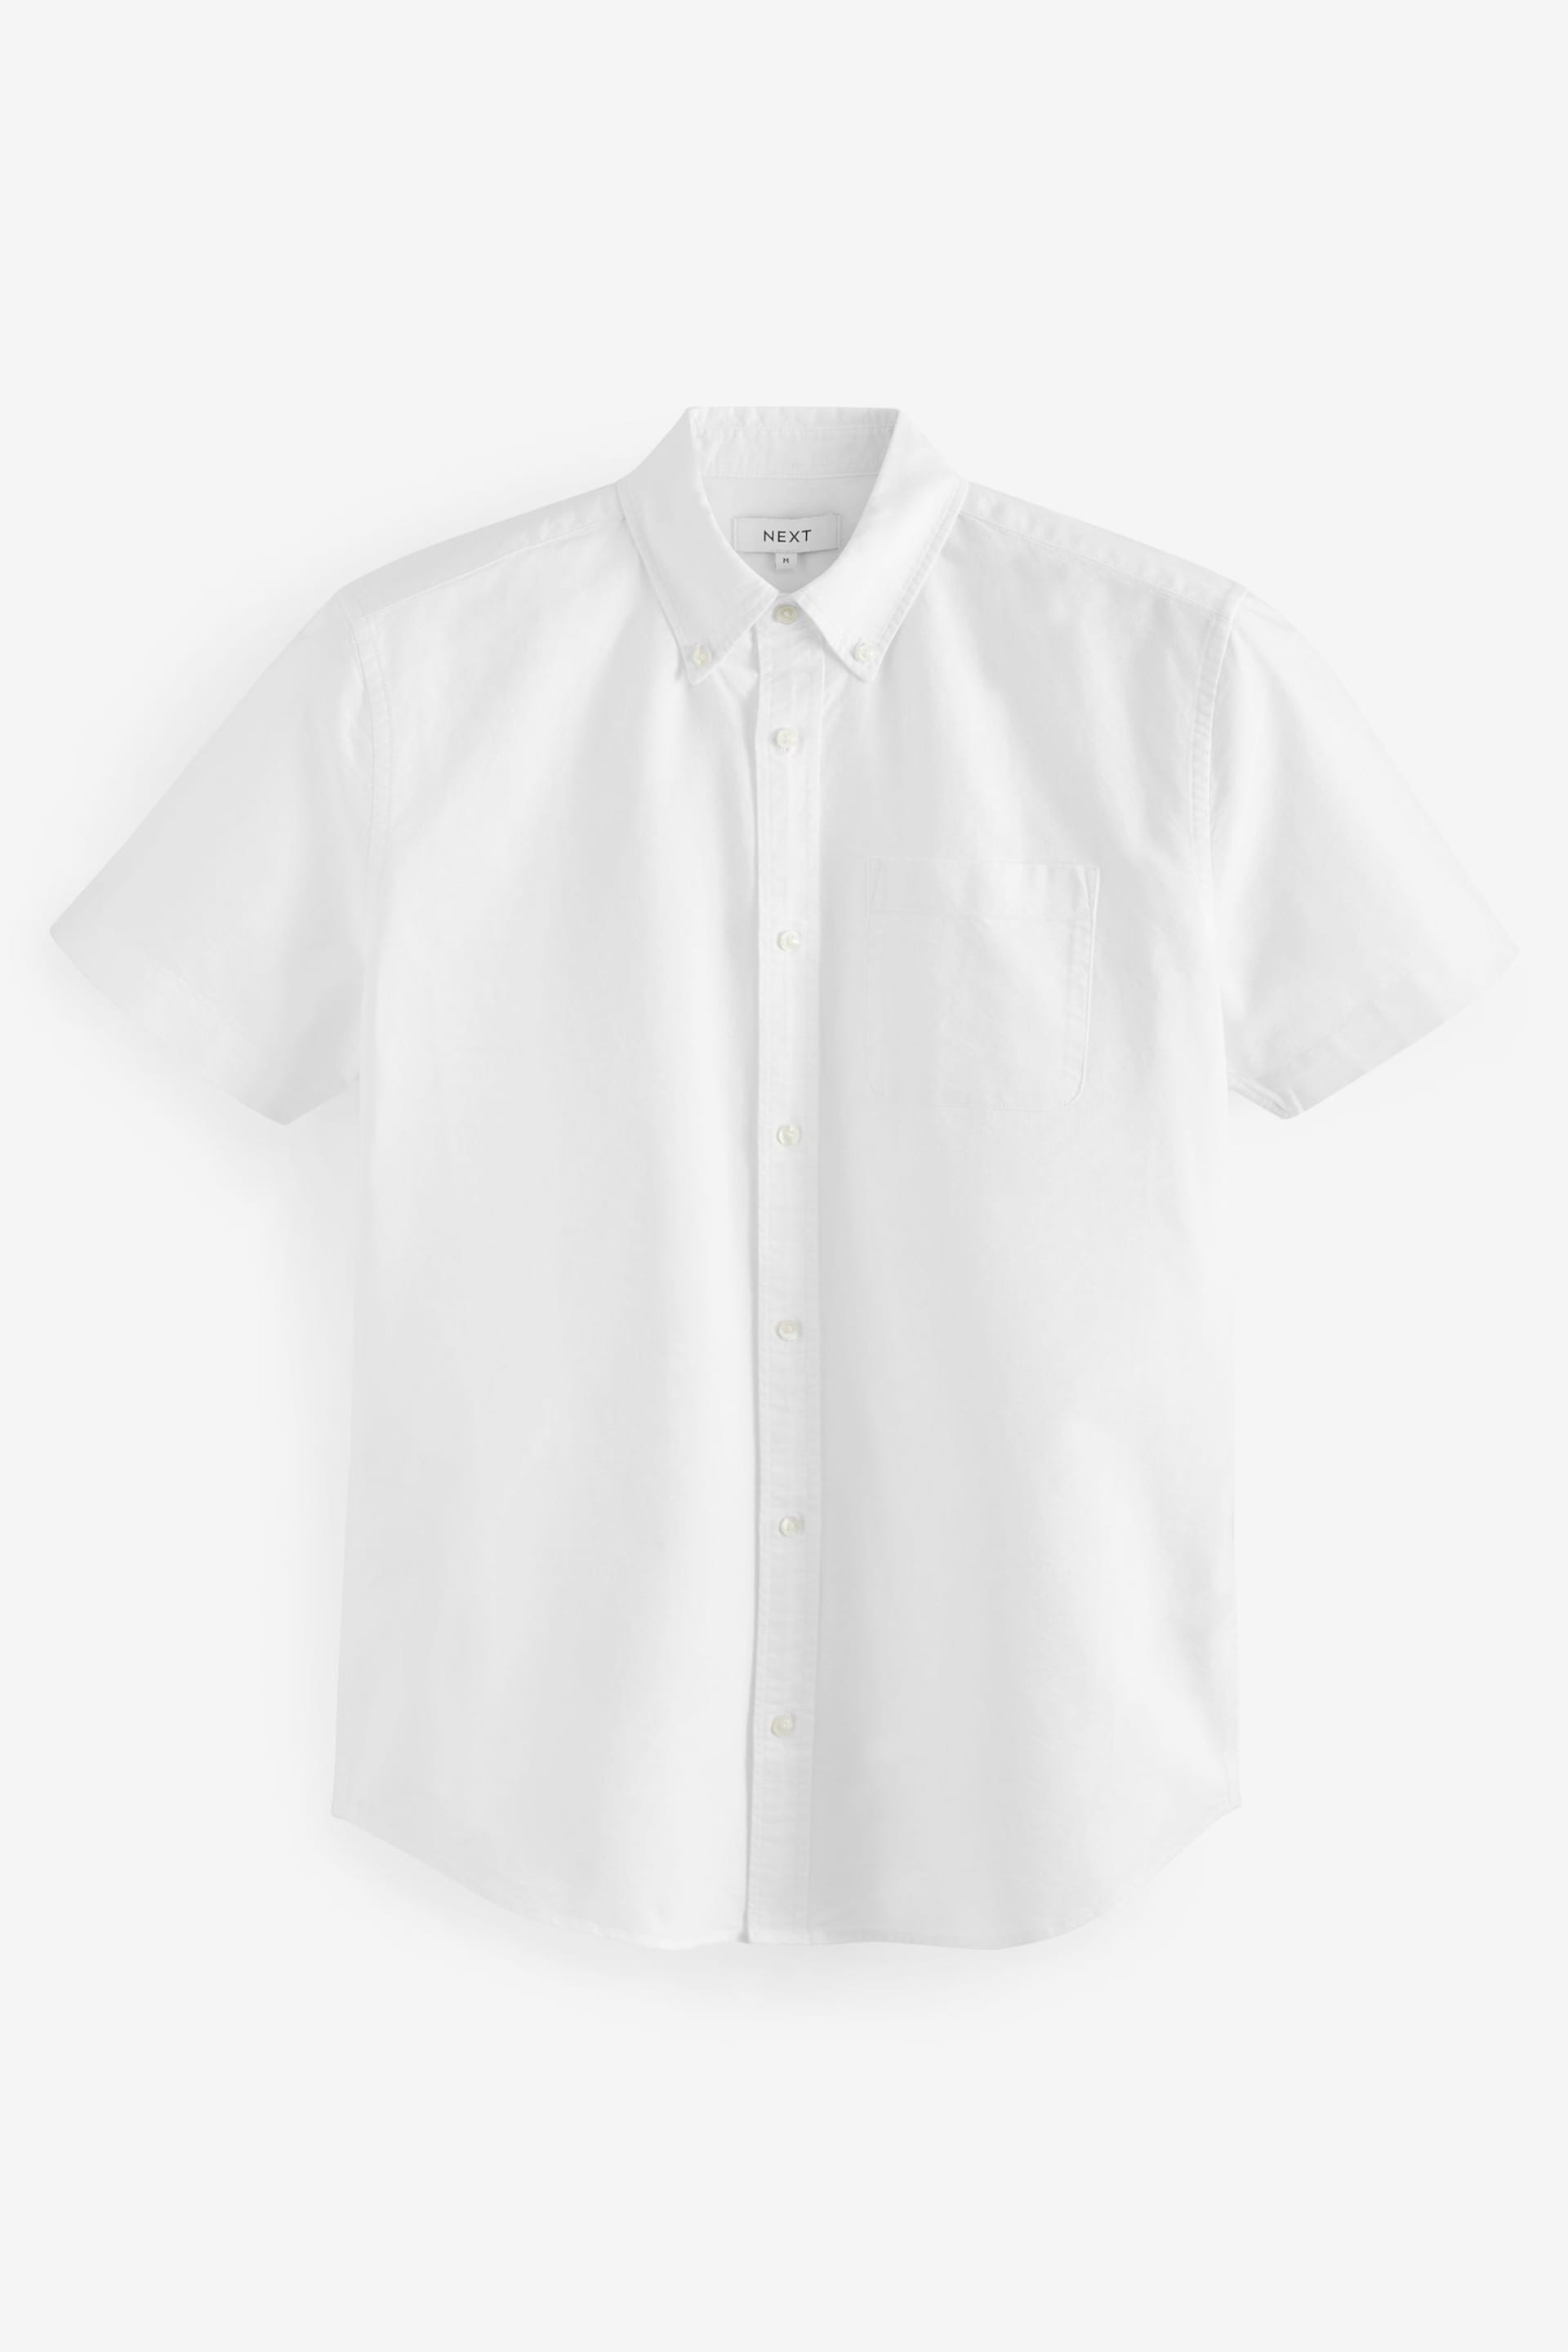 White Short Sleeve Oxford Shirt 3 Pack - Image 2 of 6